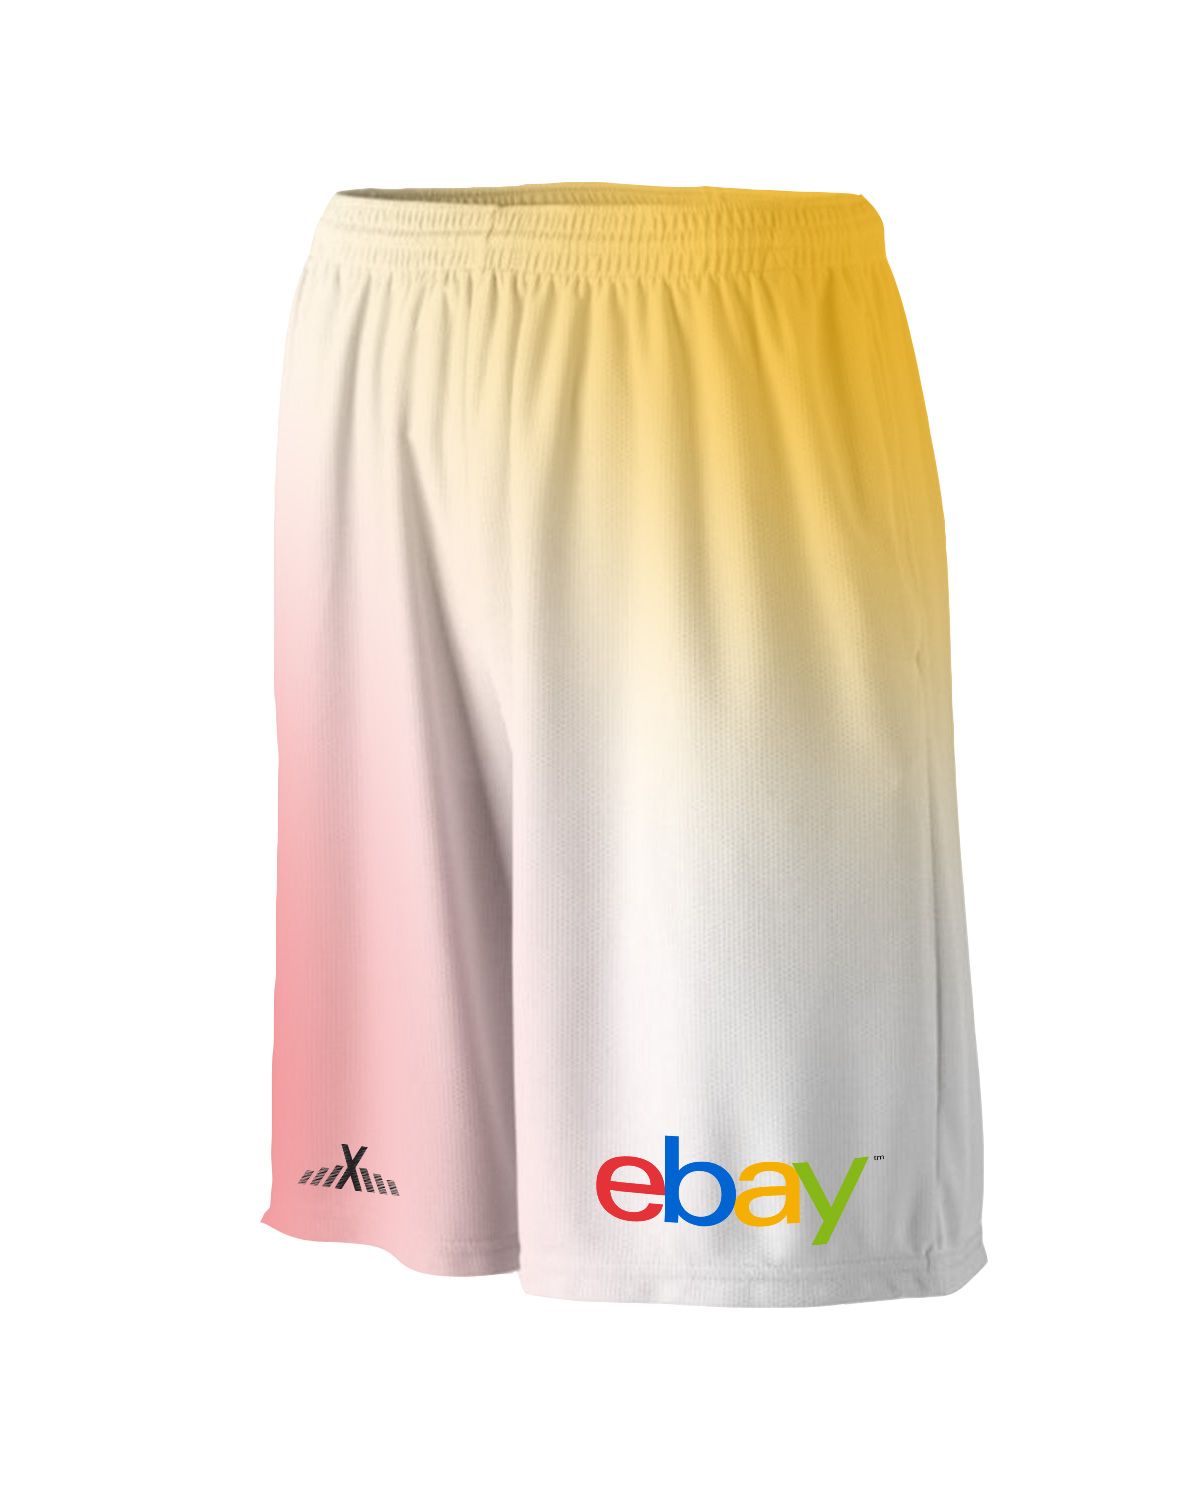 mens basketball shorts custom